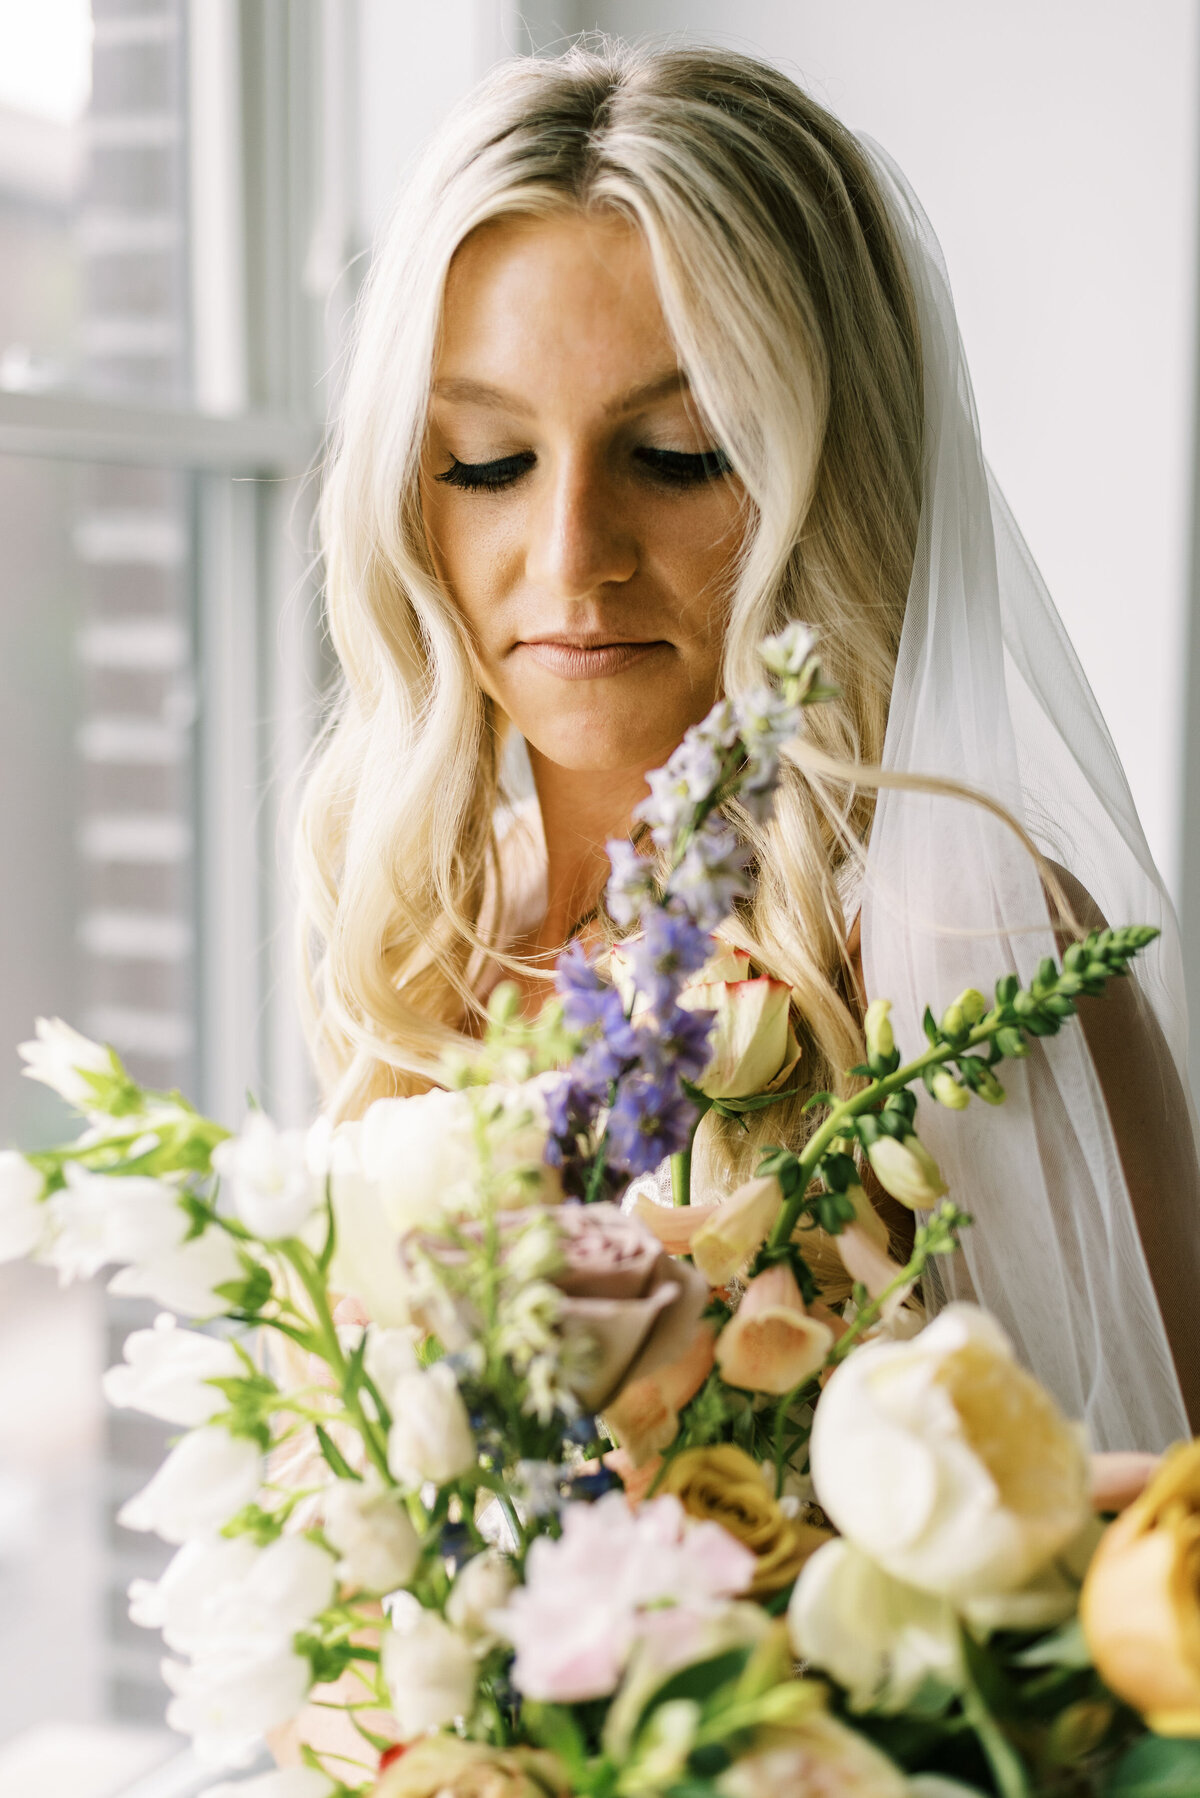 The Day's Design Northern Michigan Florist Lavender Wedding